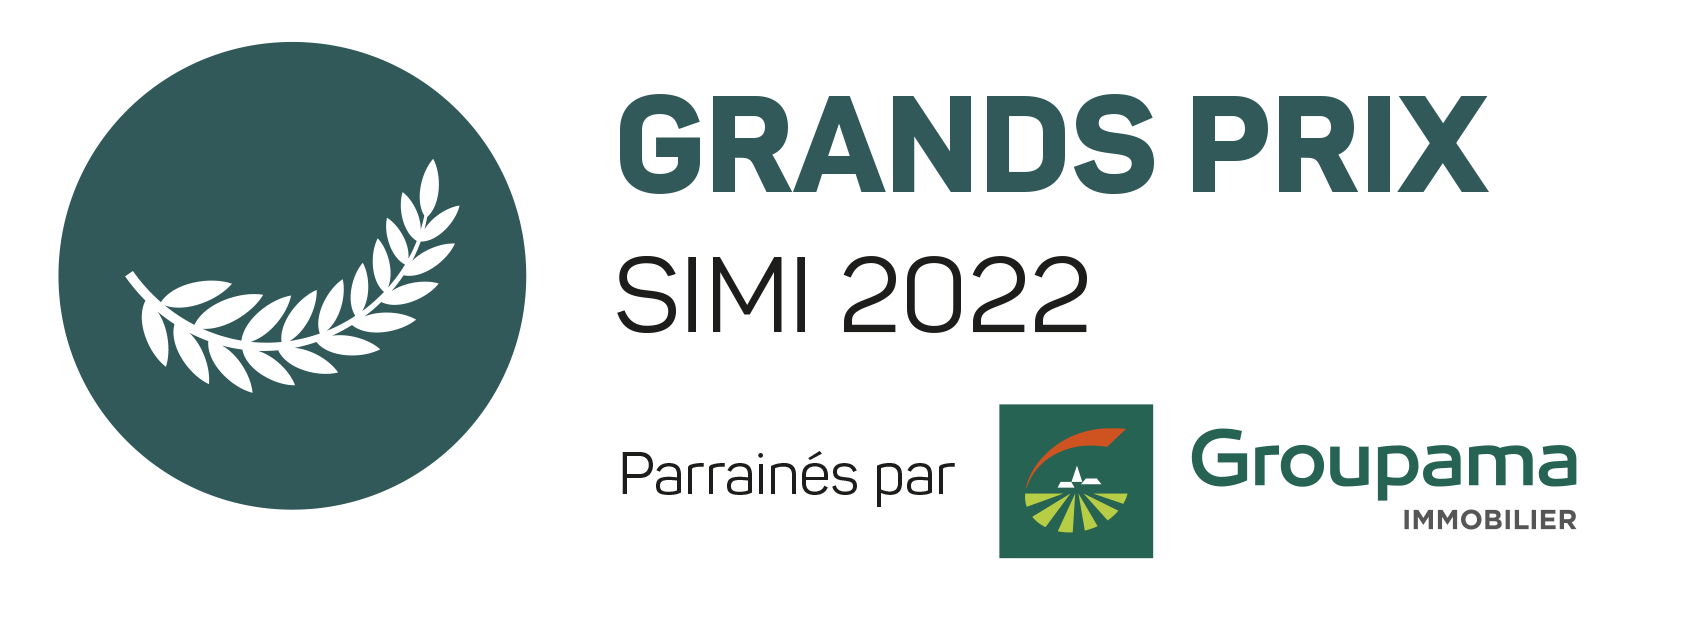 GRANDS PRIX SIMI 2022